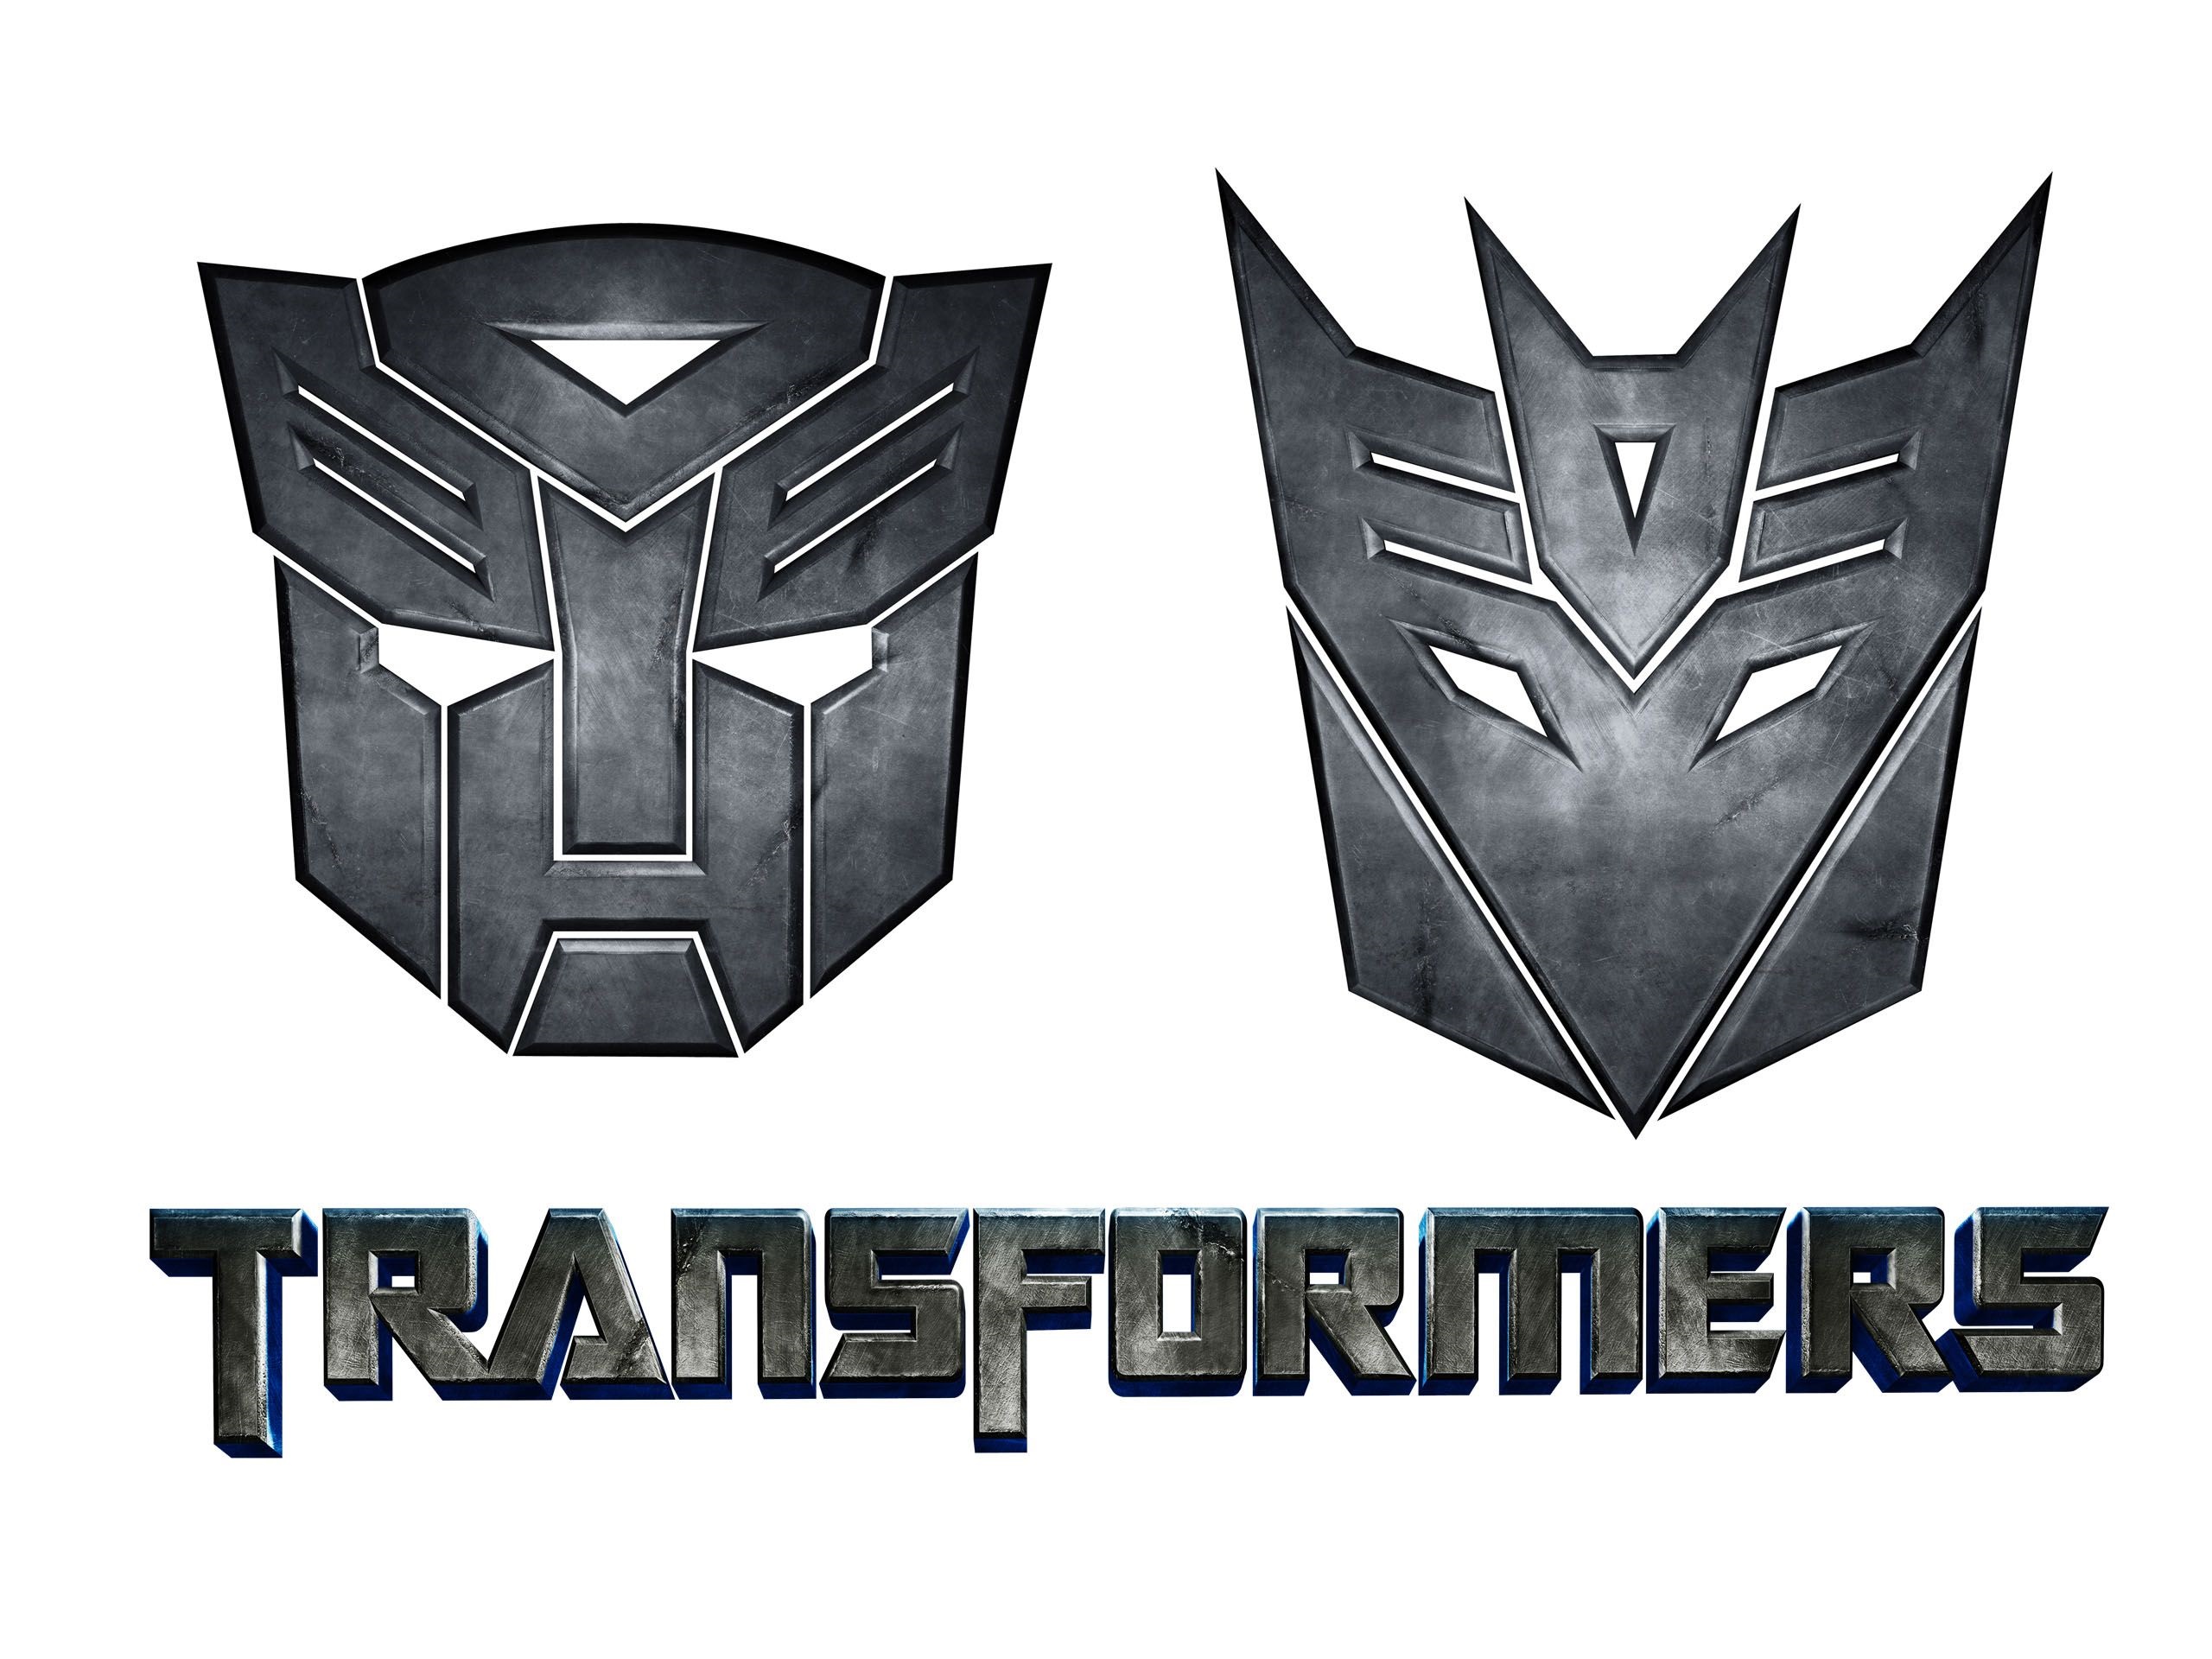 Transformers - Peliculas en 3D (2011-2017)